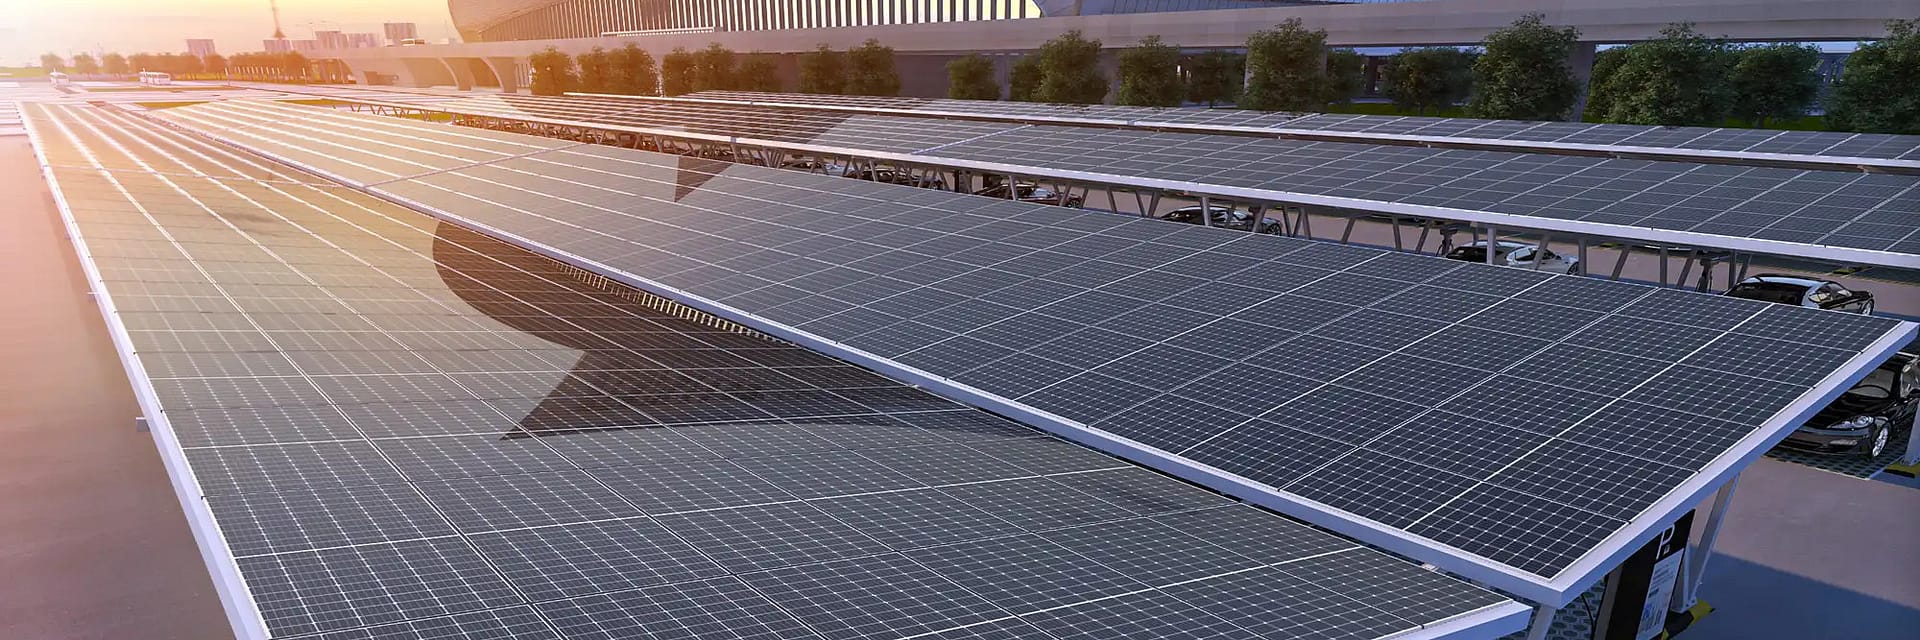 solar carport panel roof